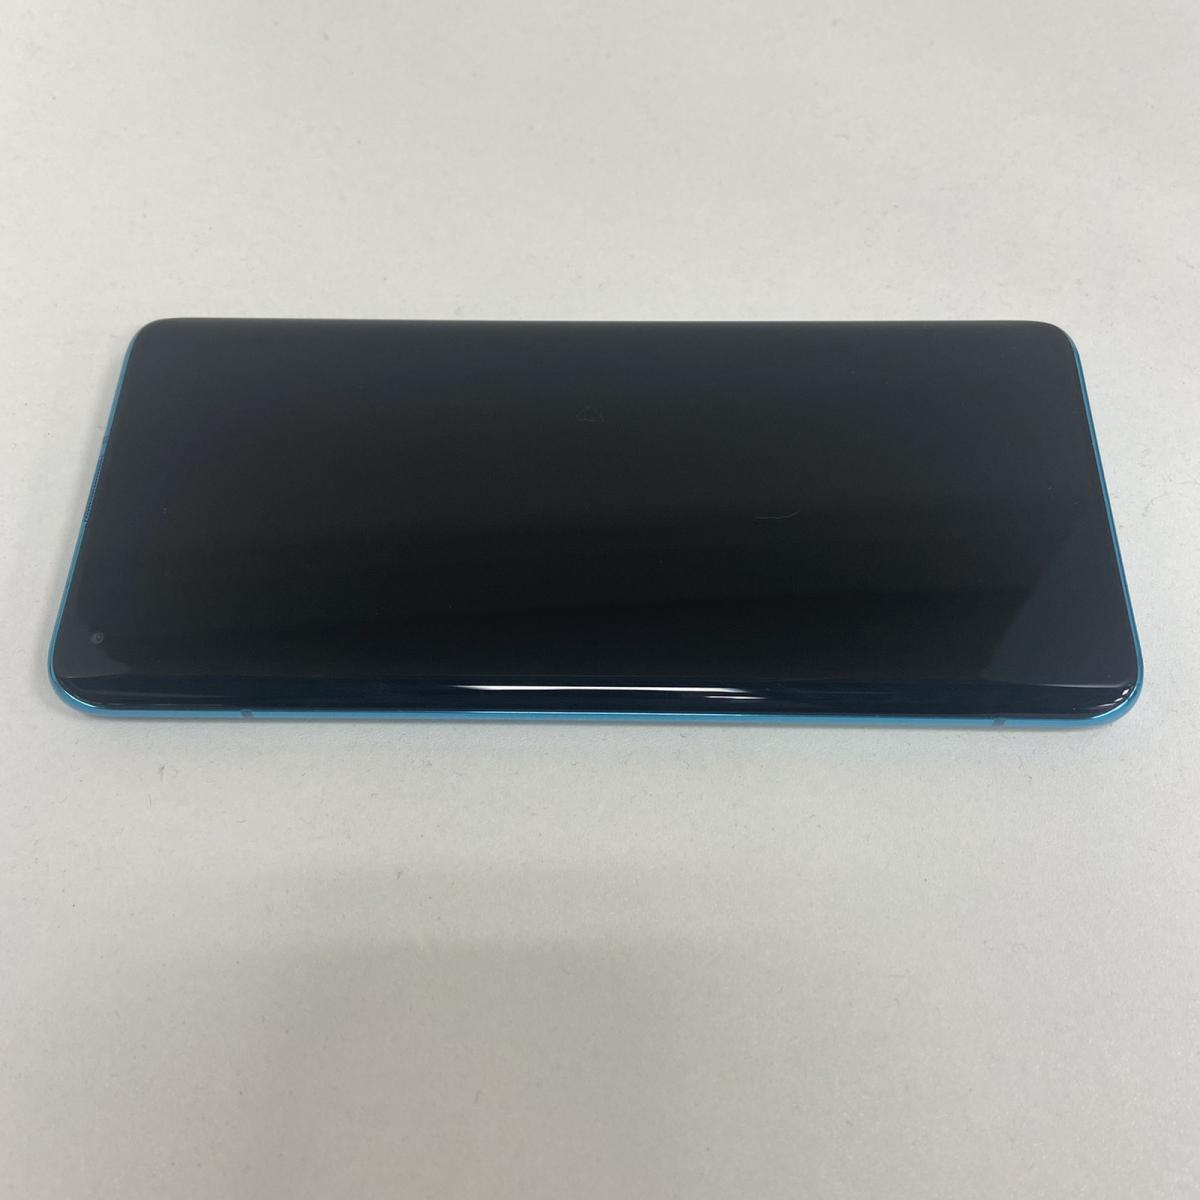 Xiaomi Mi 10 Coral Green